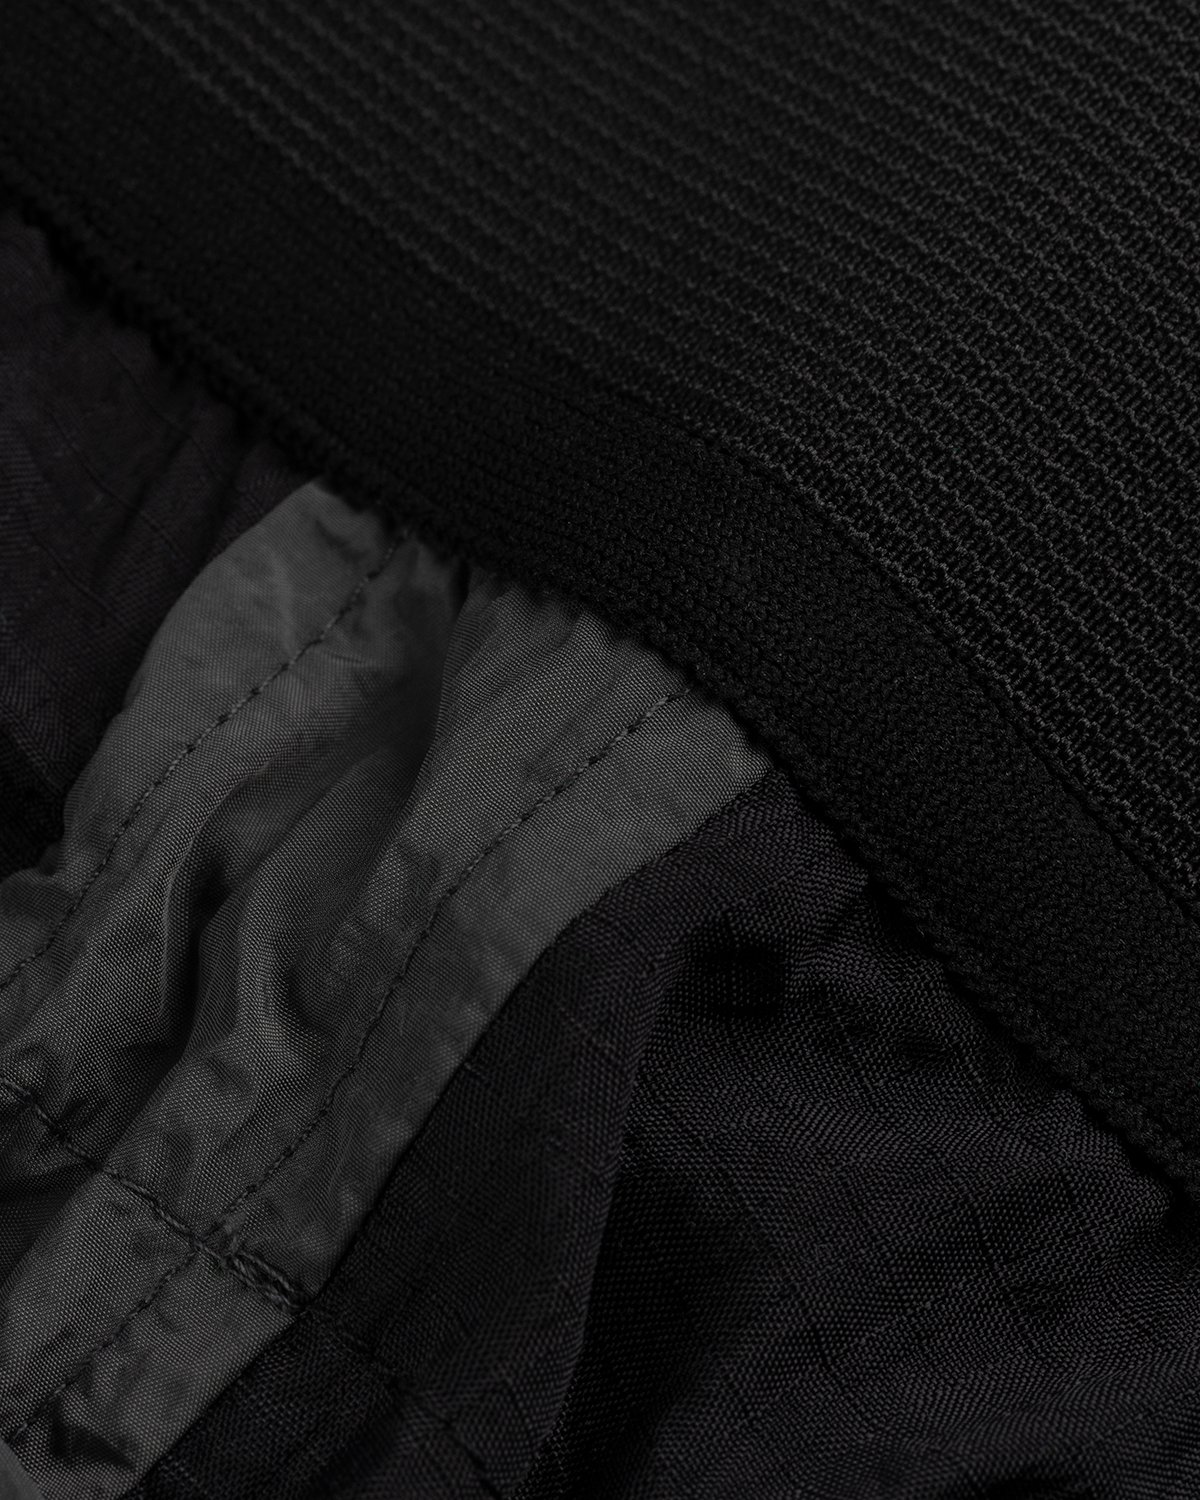 Arnar Mar Jonsson - Oroi Paneled Trouser Black/Charcoal - Clothing - Brown - Image 7